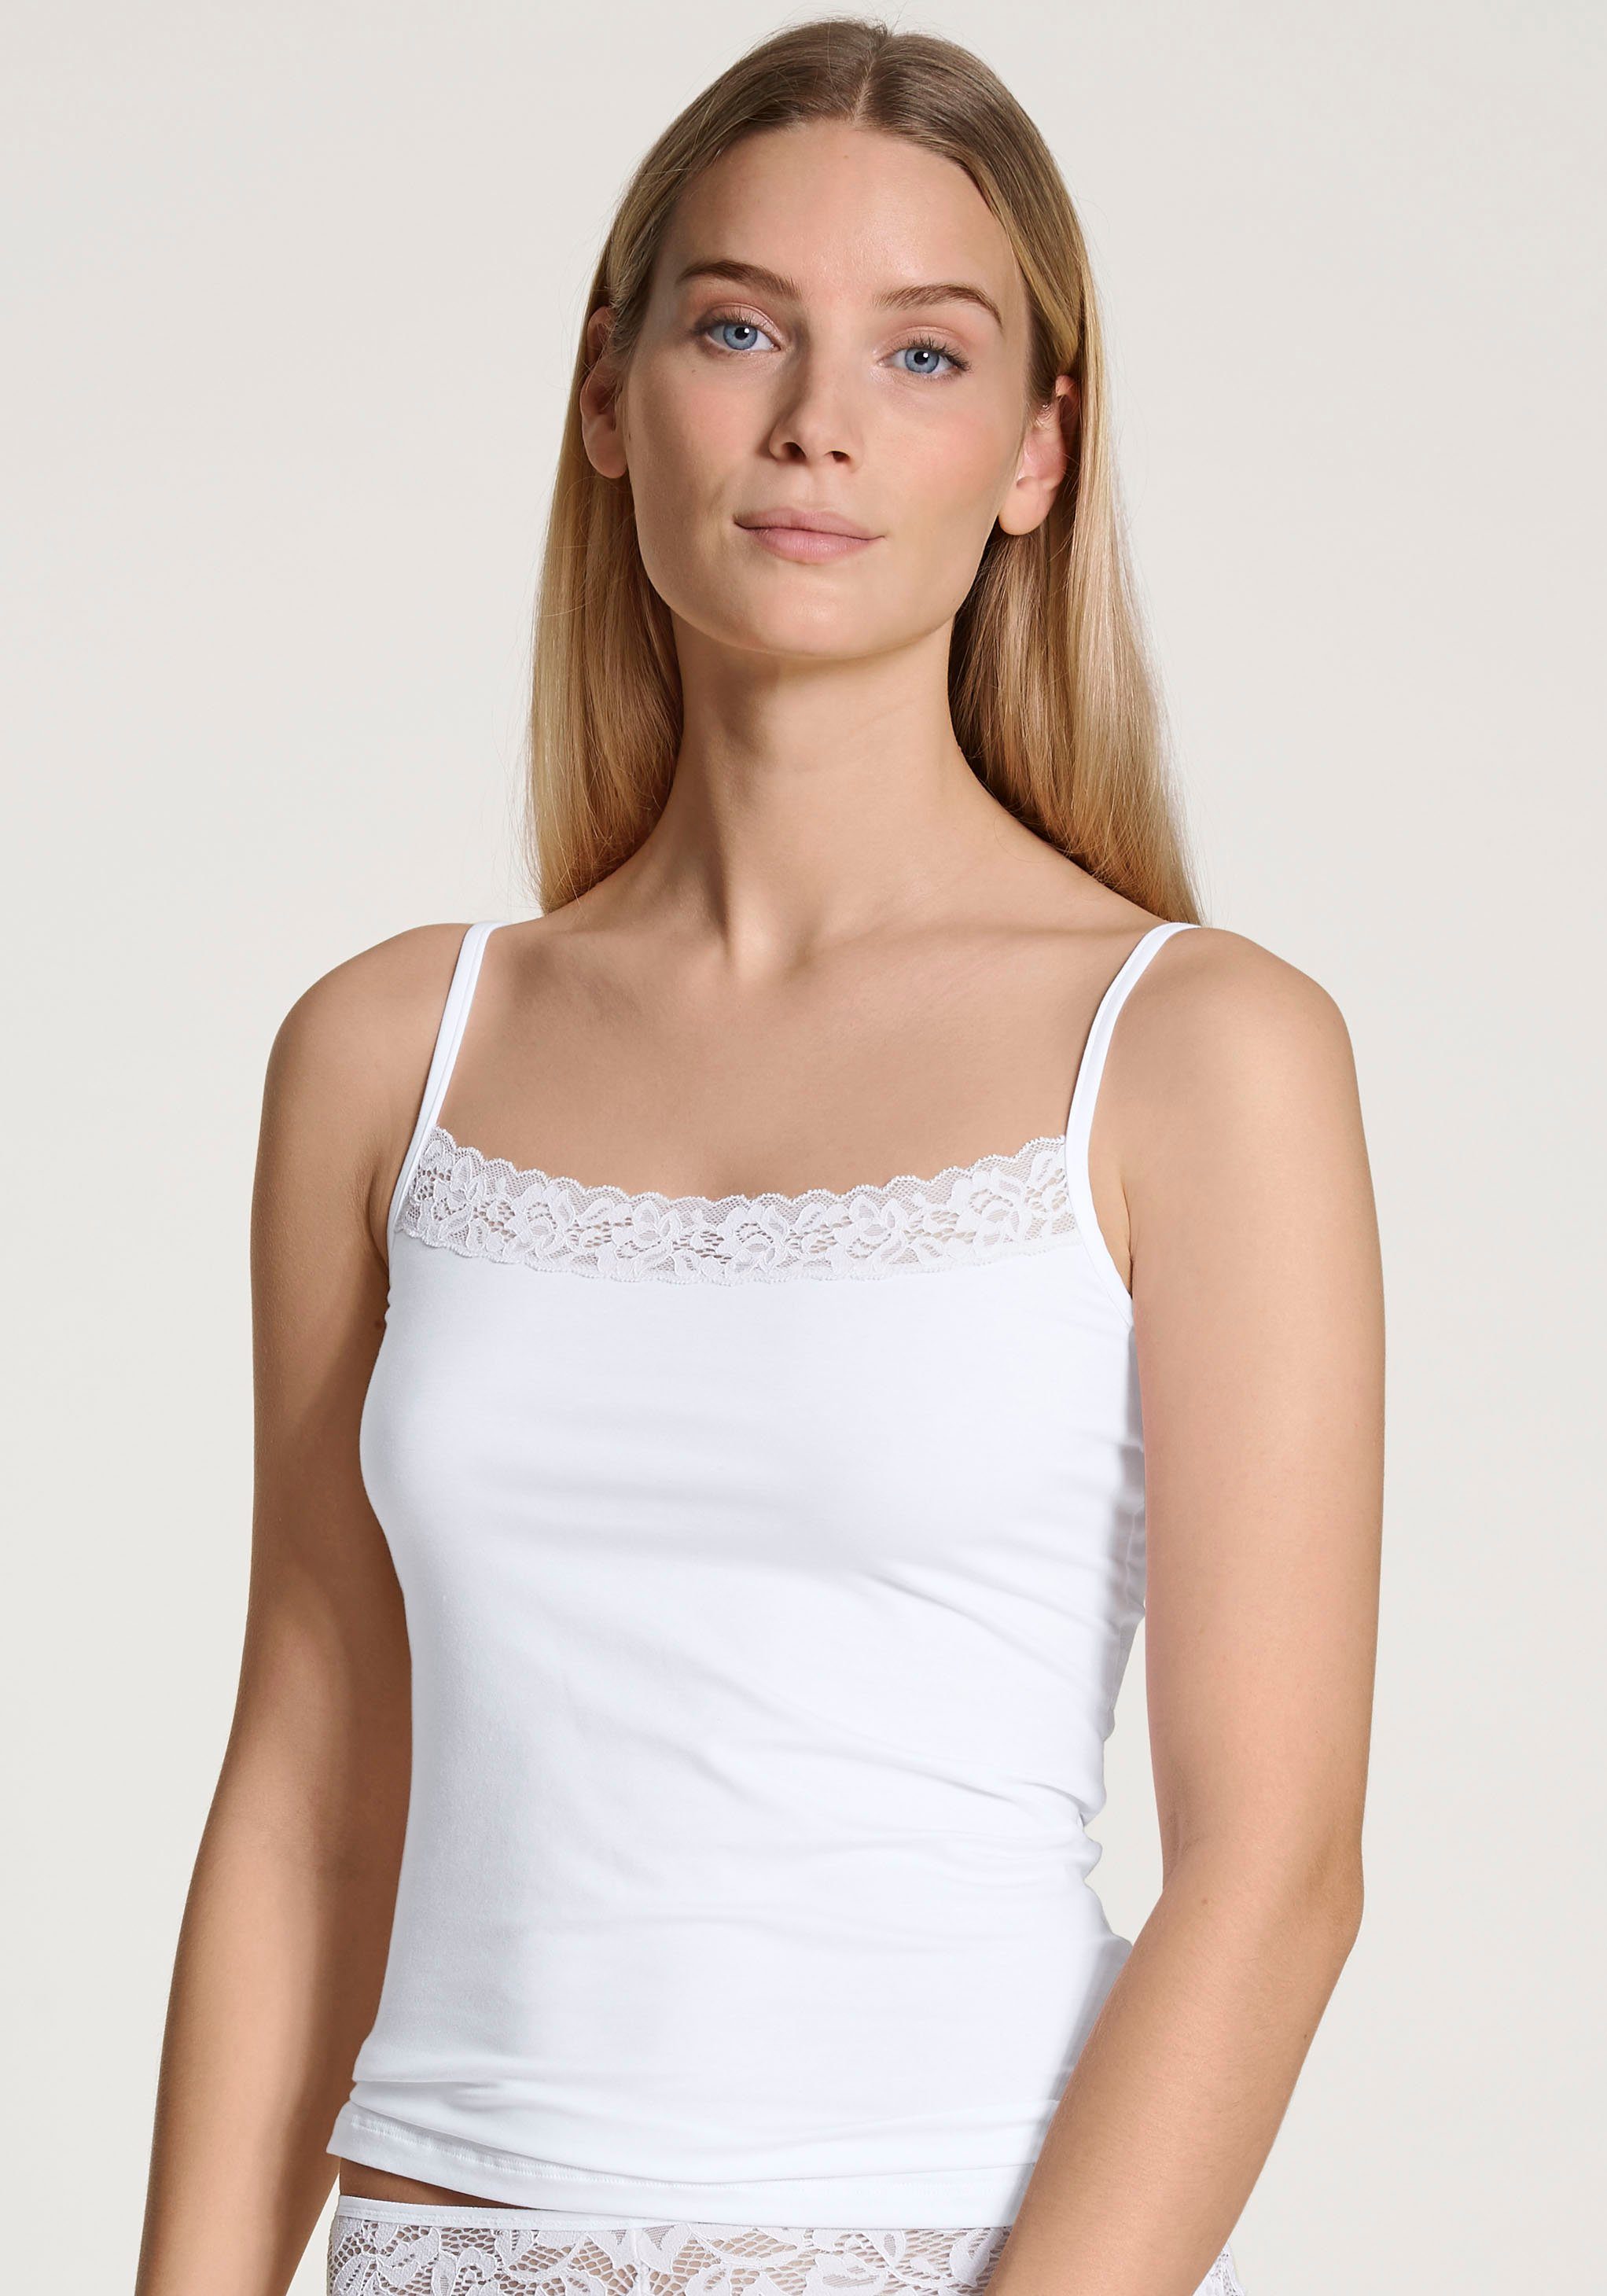 Trägern, weiss Lace mit Spitzen-Look Top Comfort Unterhemd zarter CALIDA verstellbaren Natural